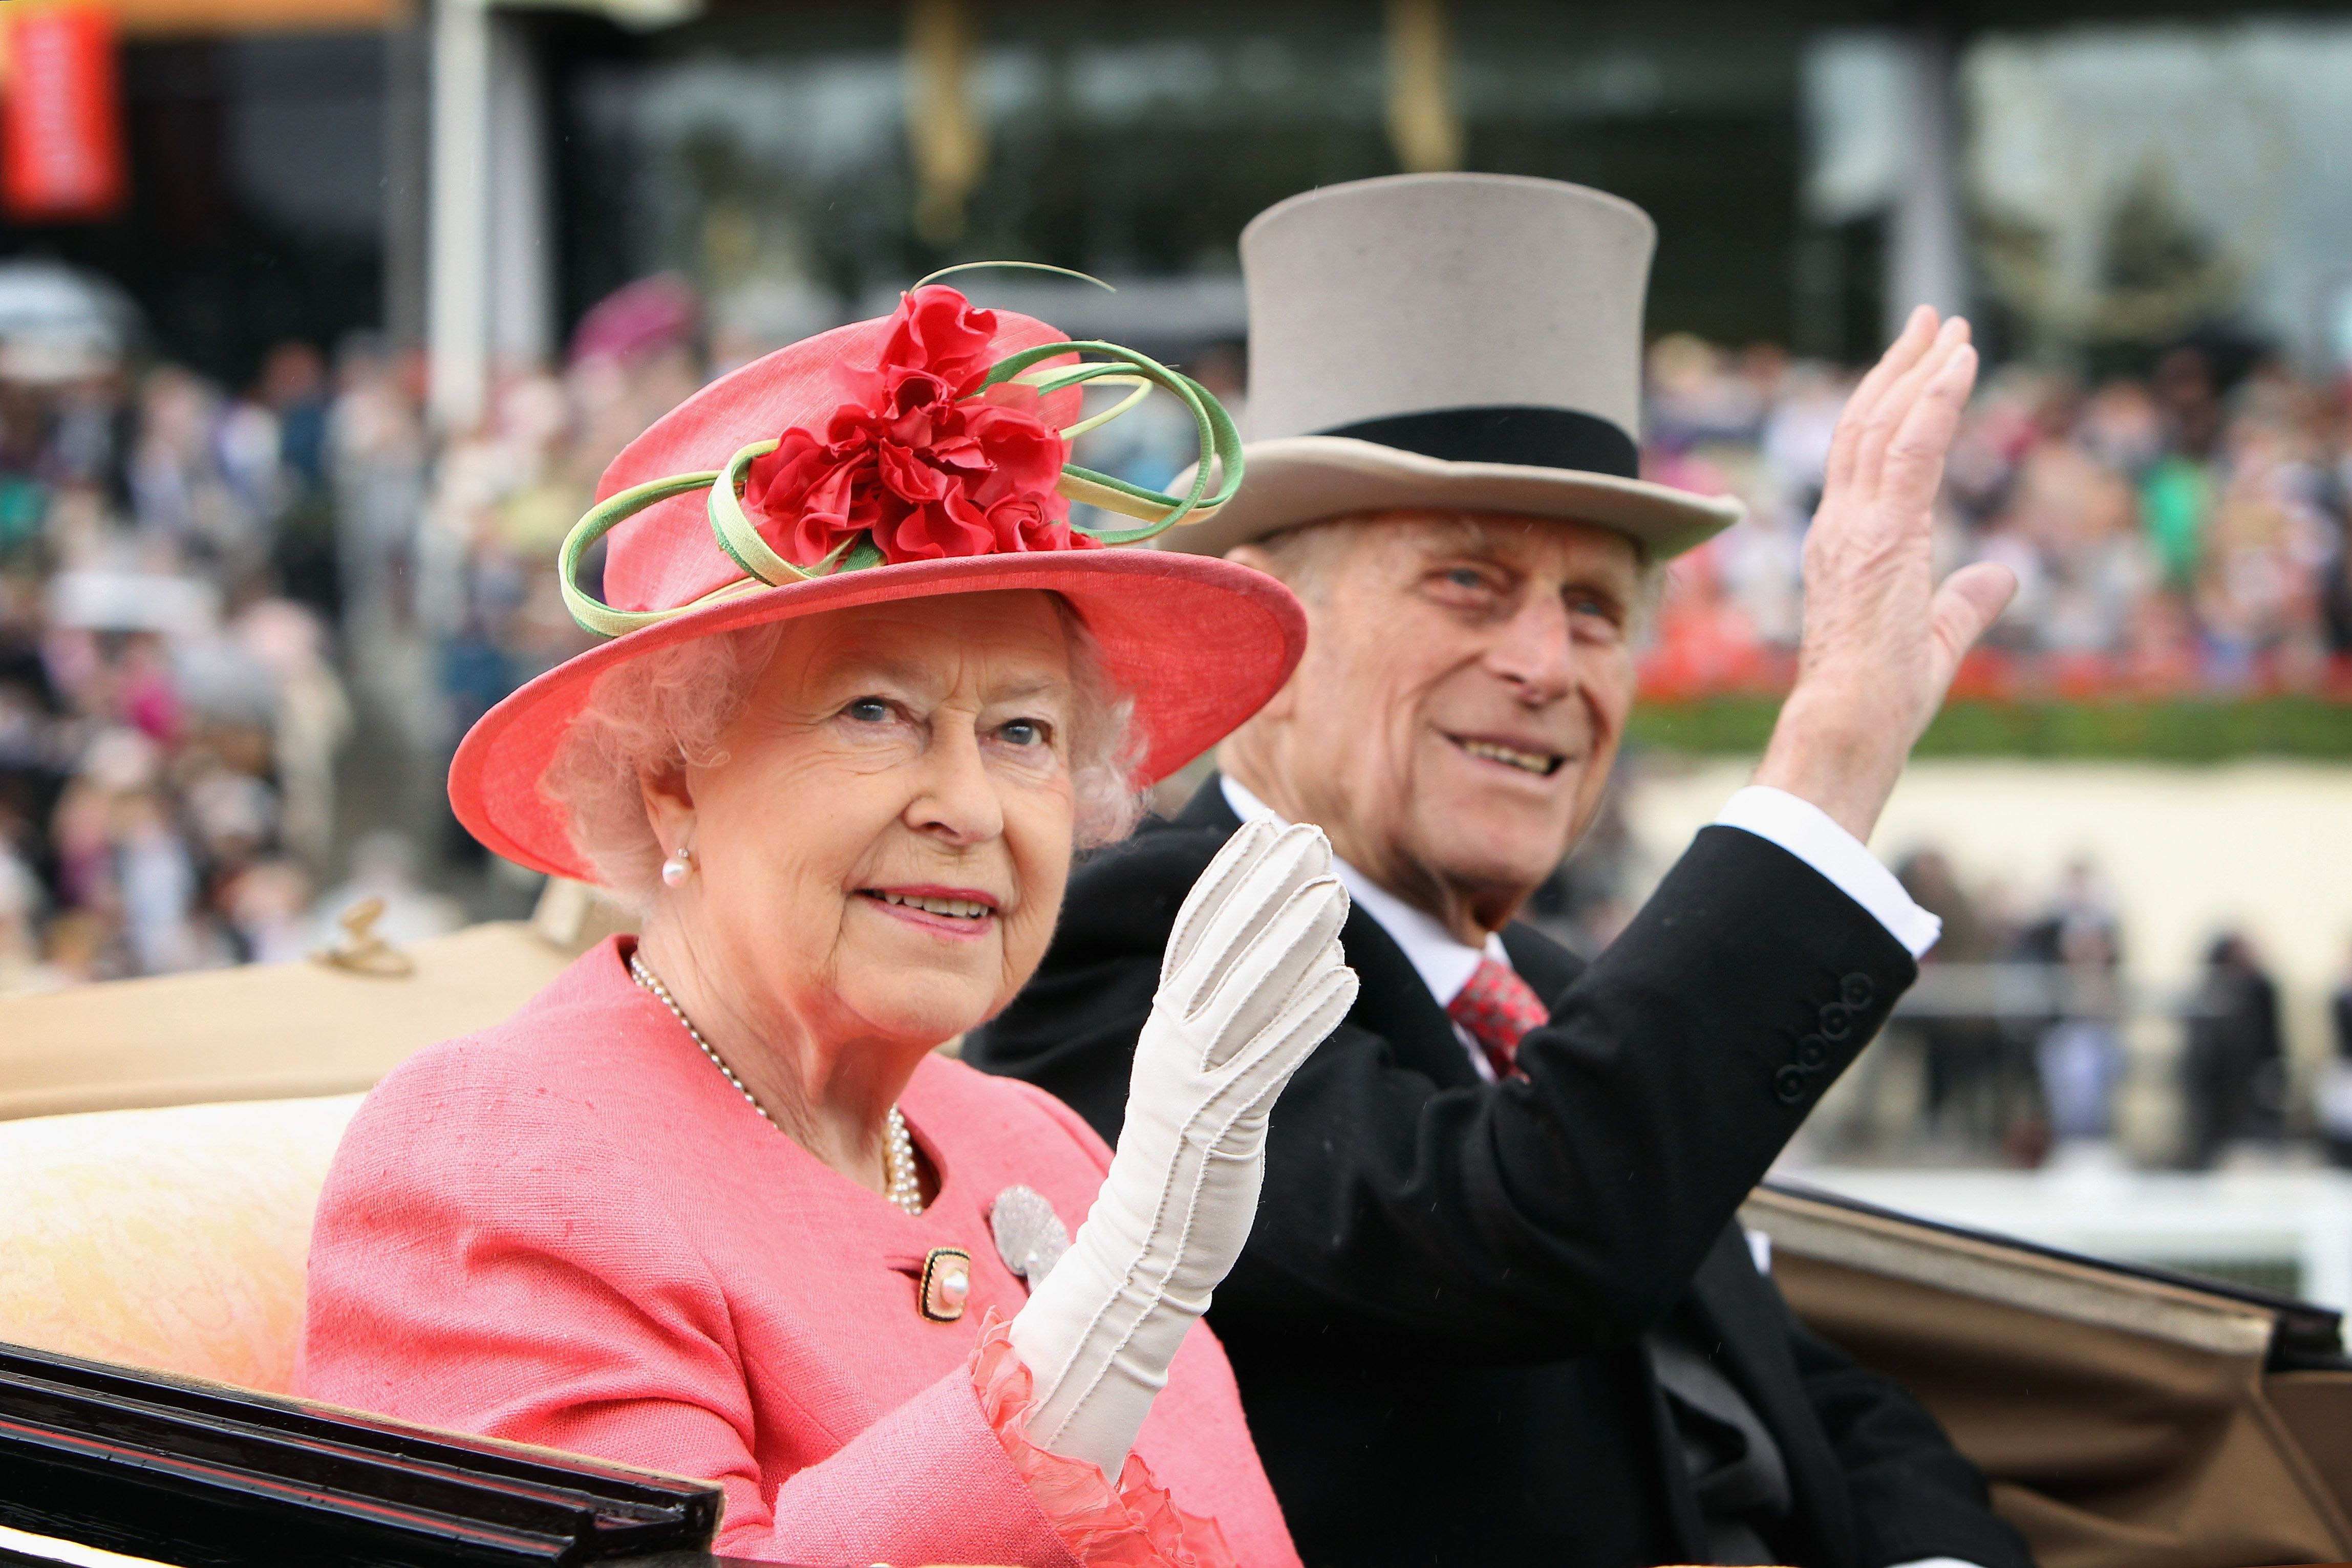 The Queen attending Royal Ascot